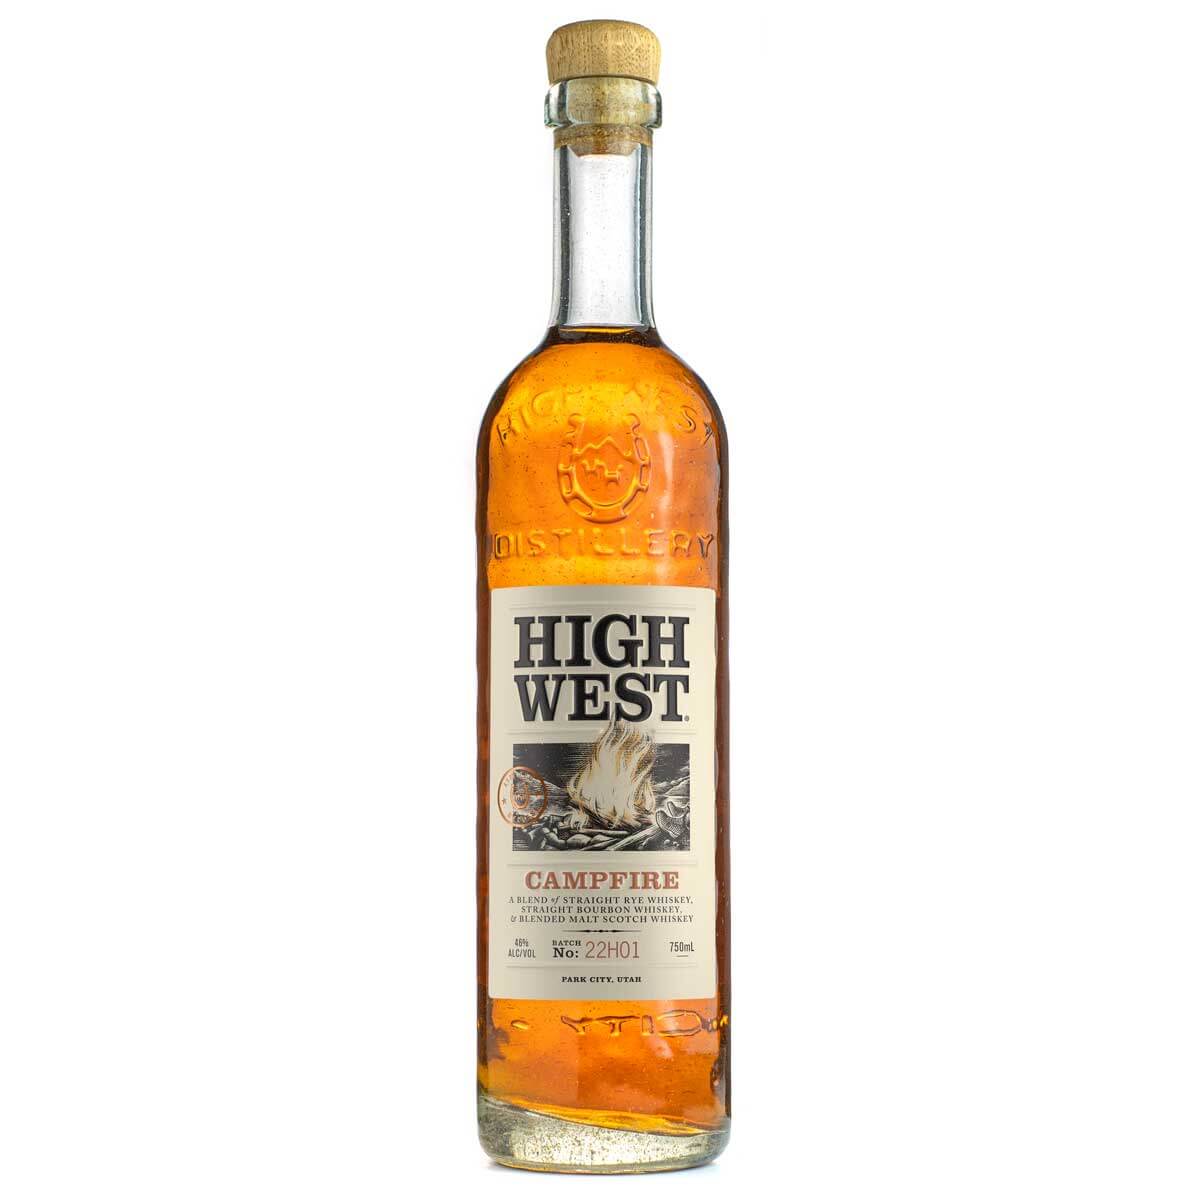 High West Campfire bottle